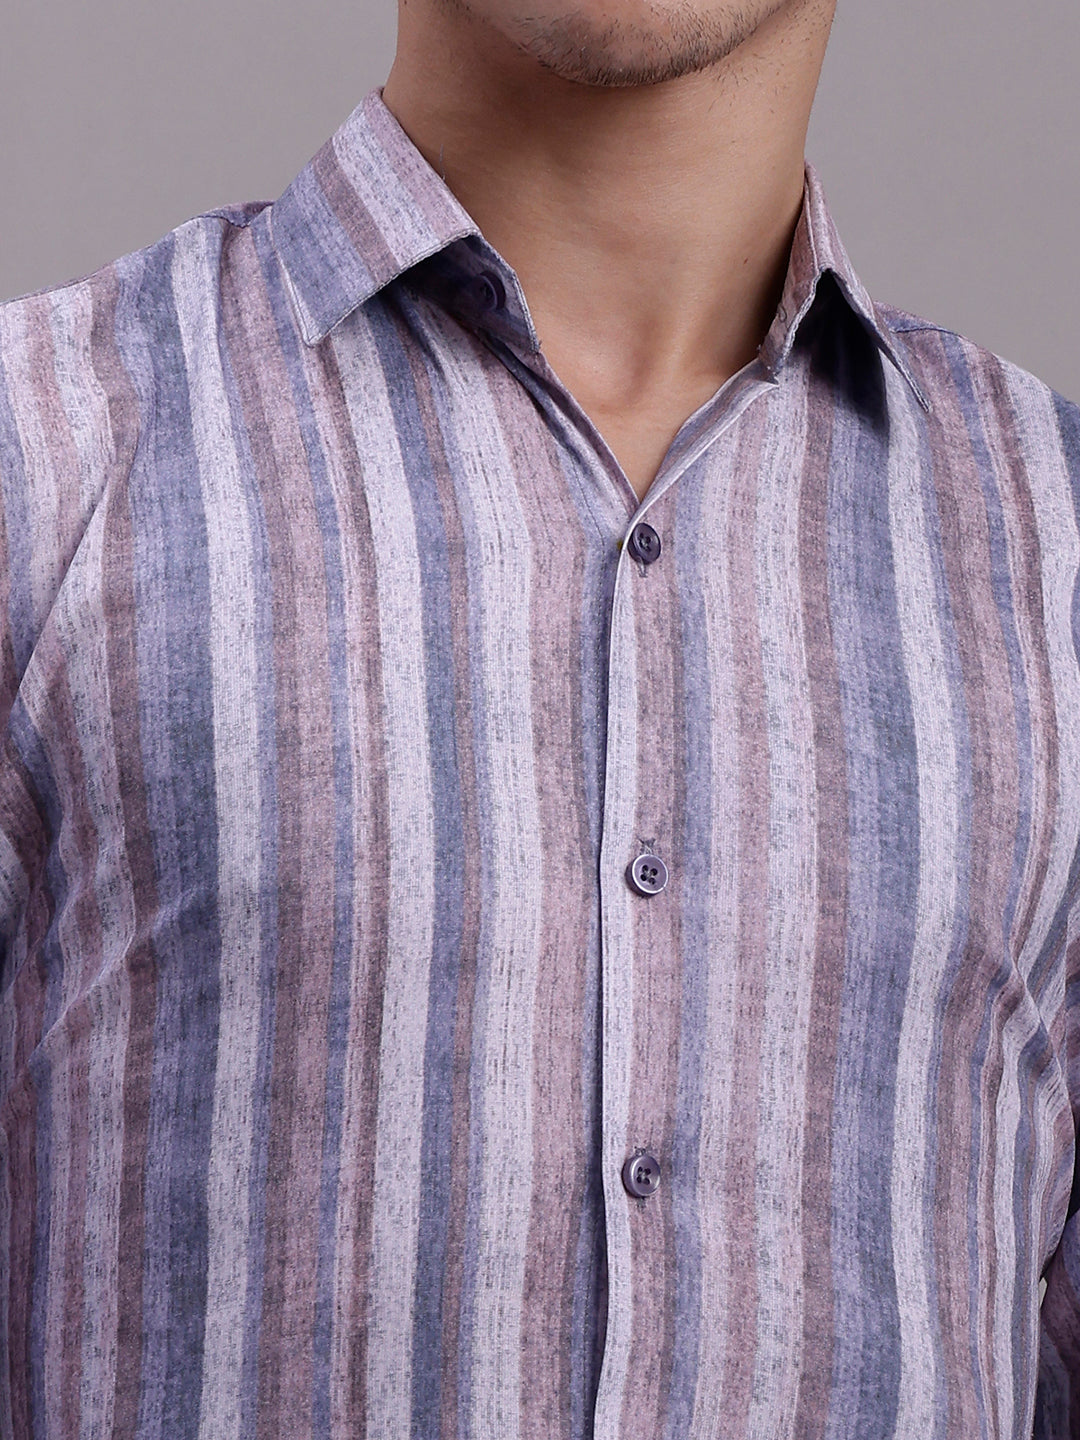 Men's Cotton Blend Striped Formal Shirt